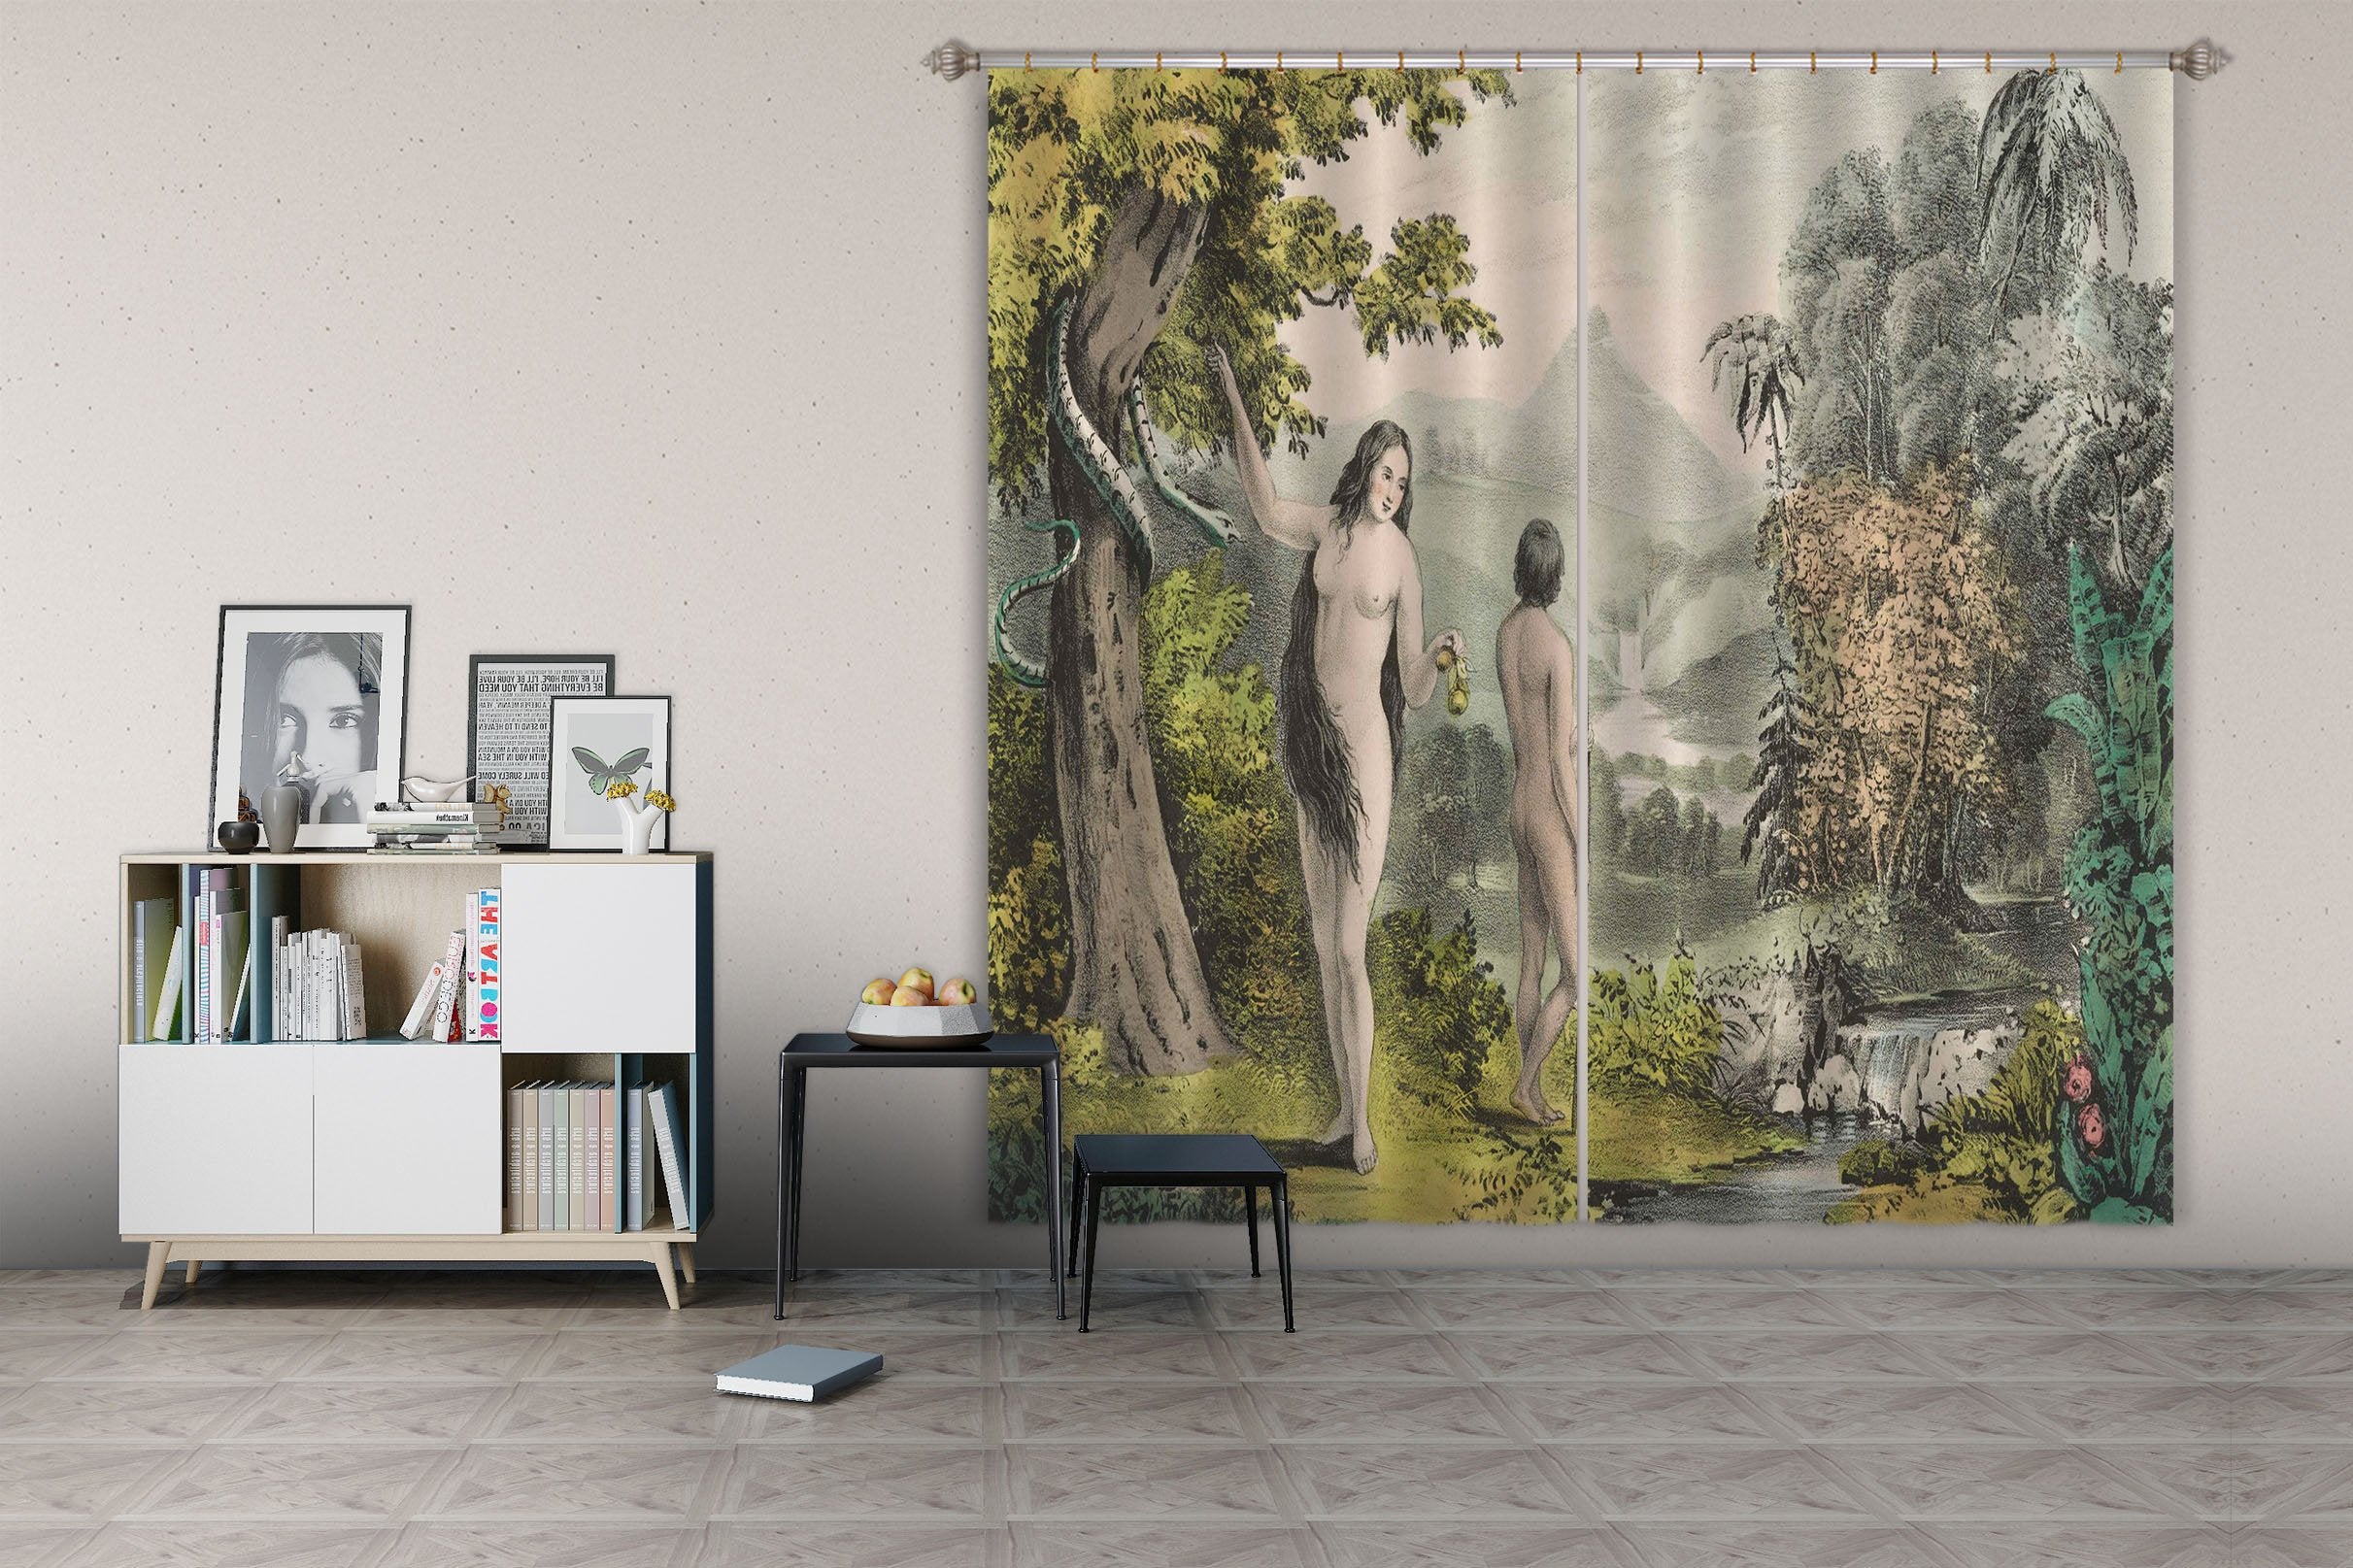 3D Adam Eve Garden 037 Andrea haase Curtain Curtains Drapes Wallpaper AJ Wallpaper 